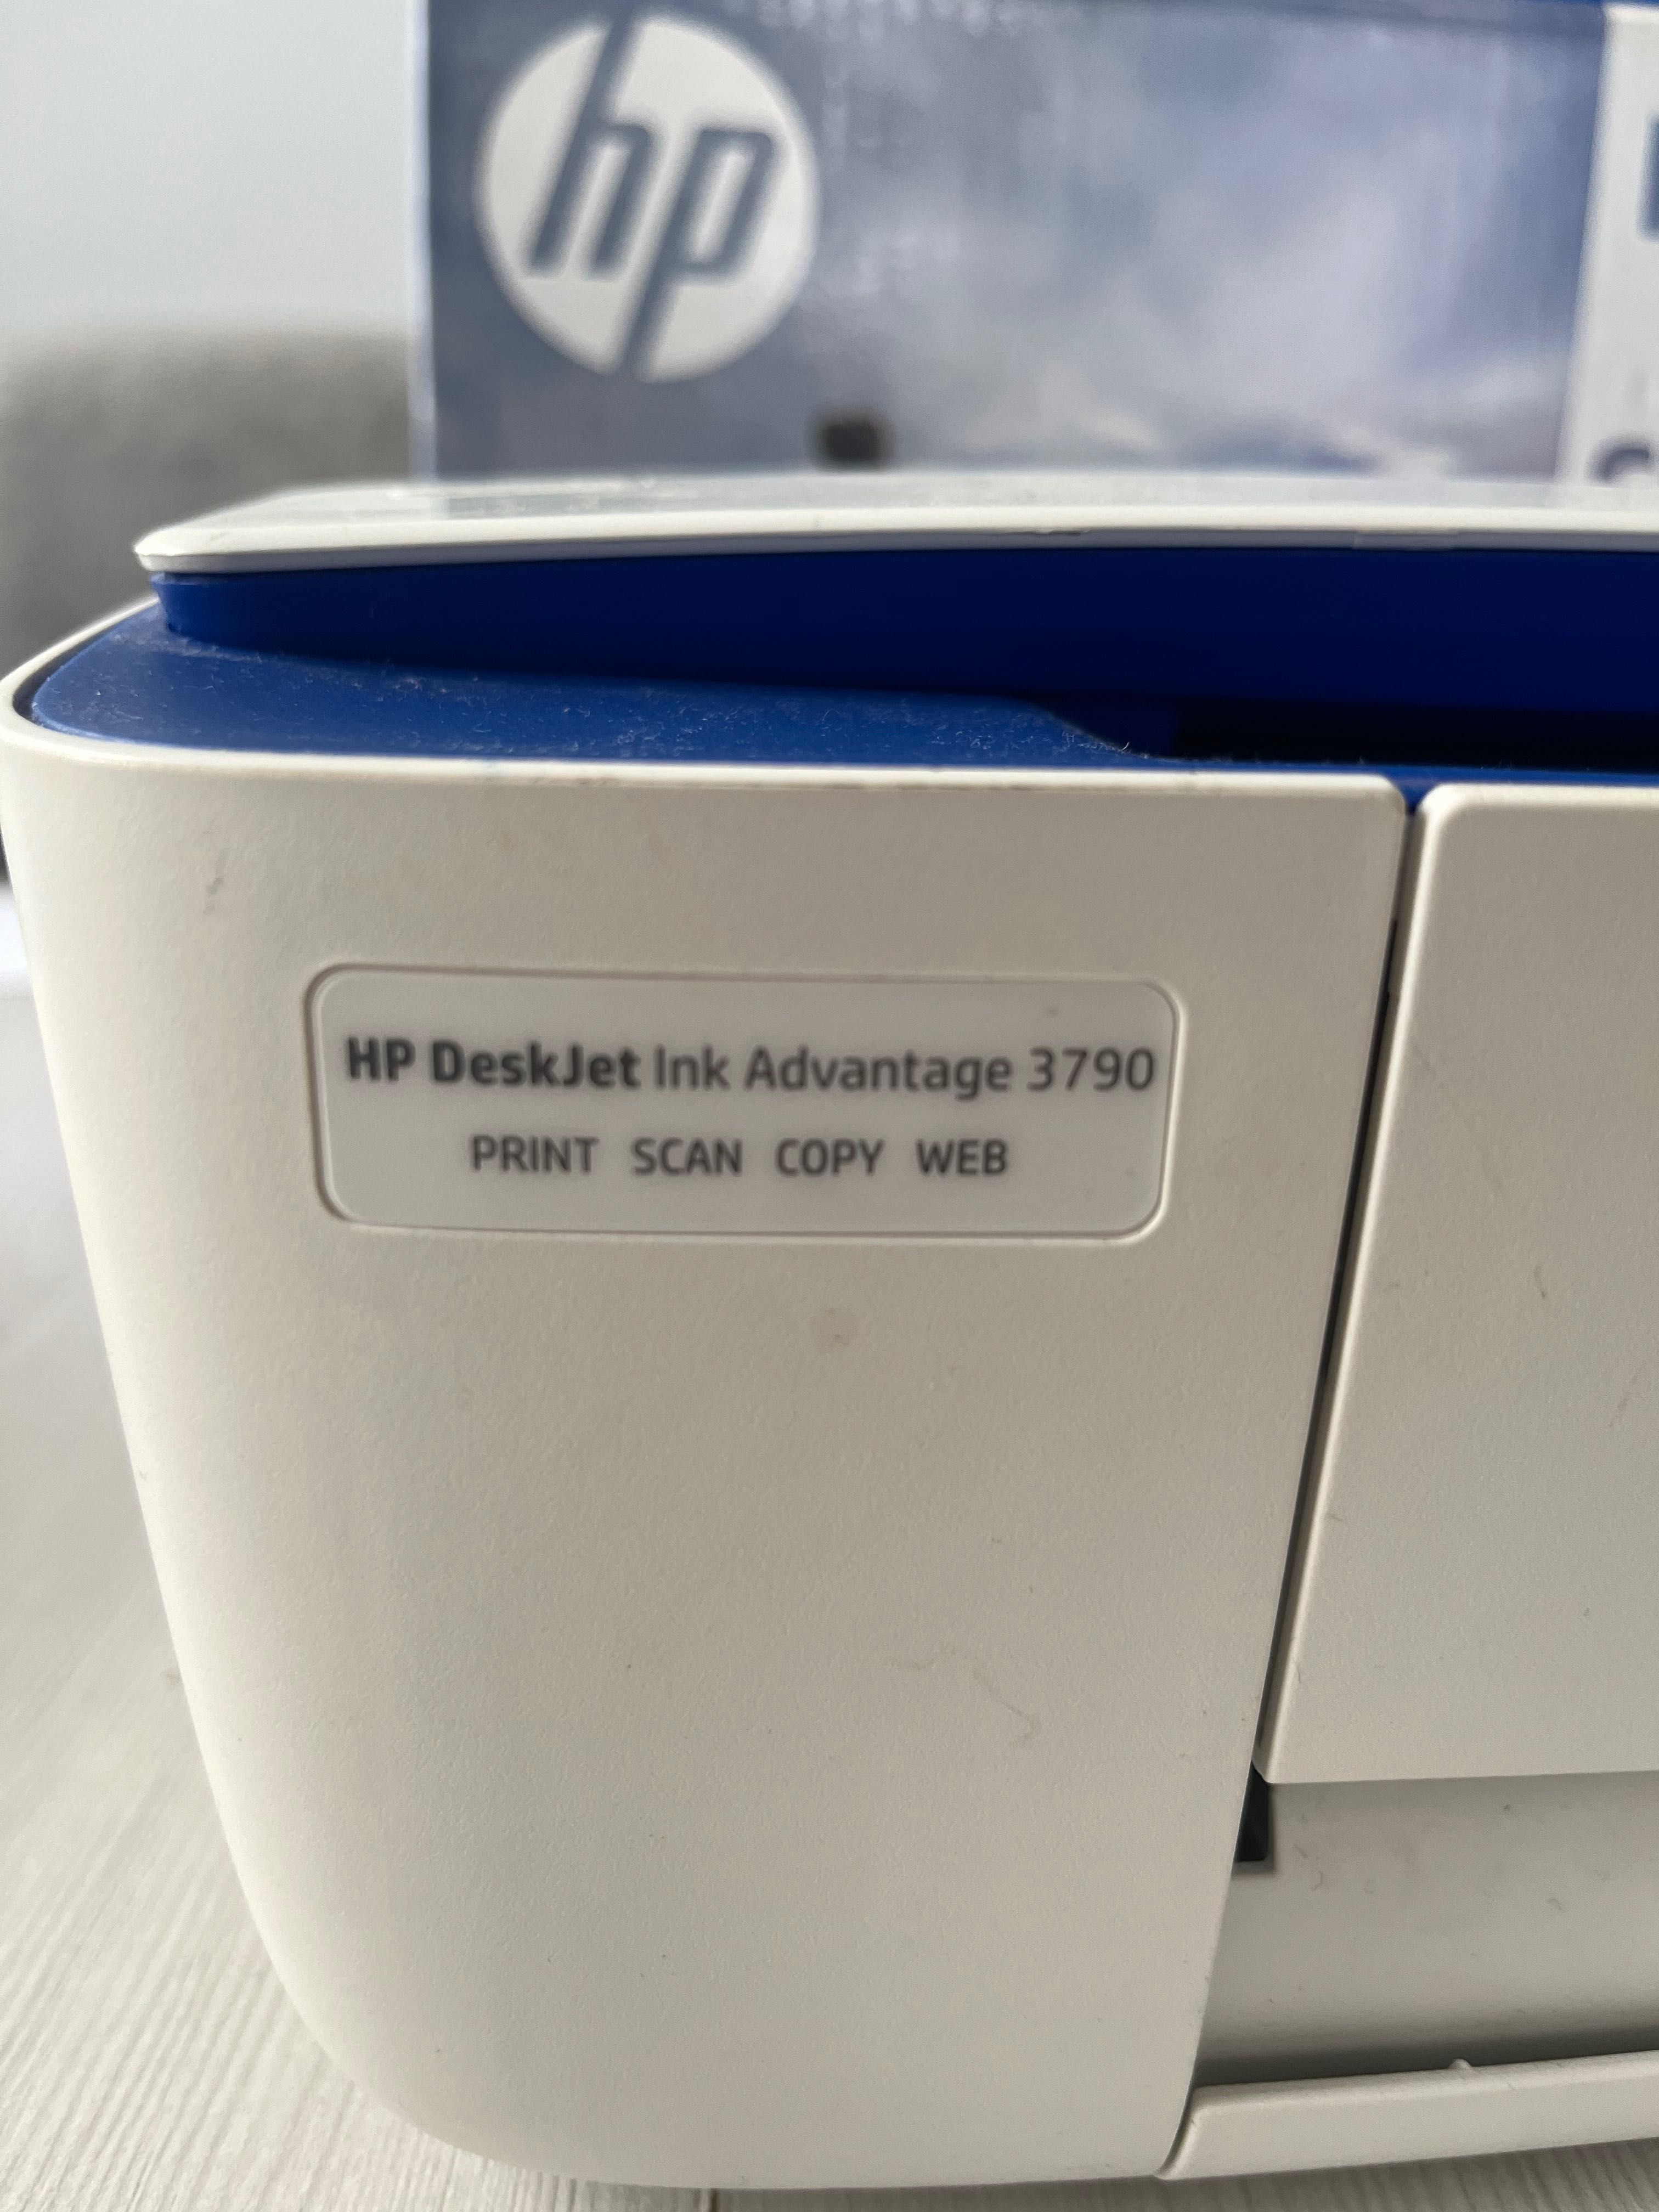 Drukarka wielofunkcyjna HP deskjet ink andvantage 3790